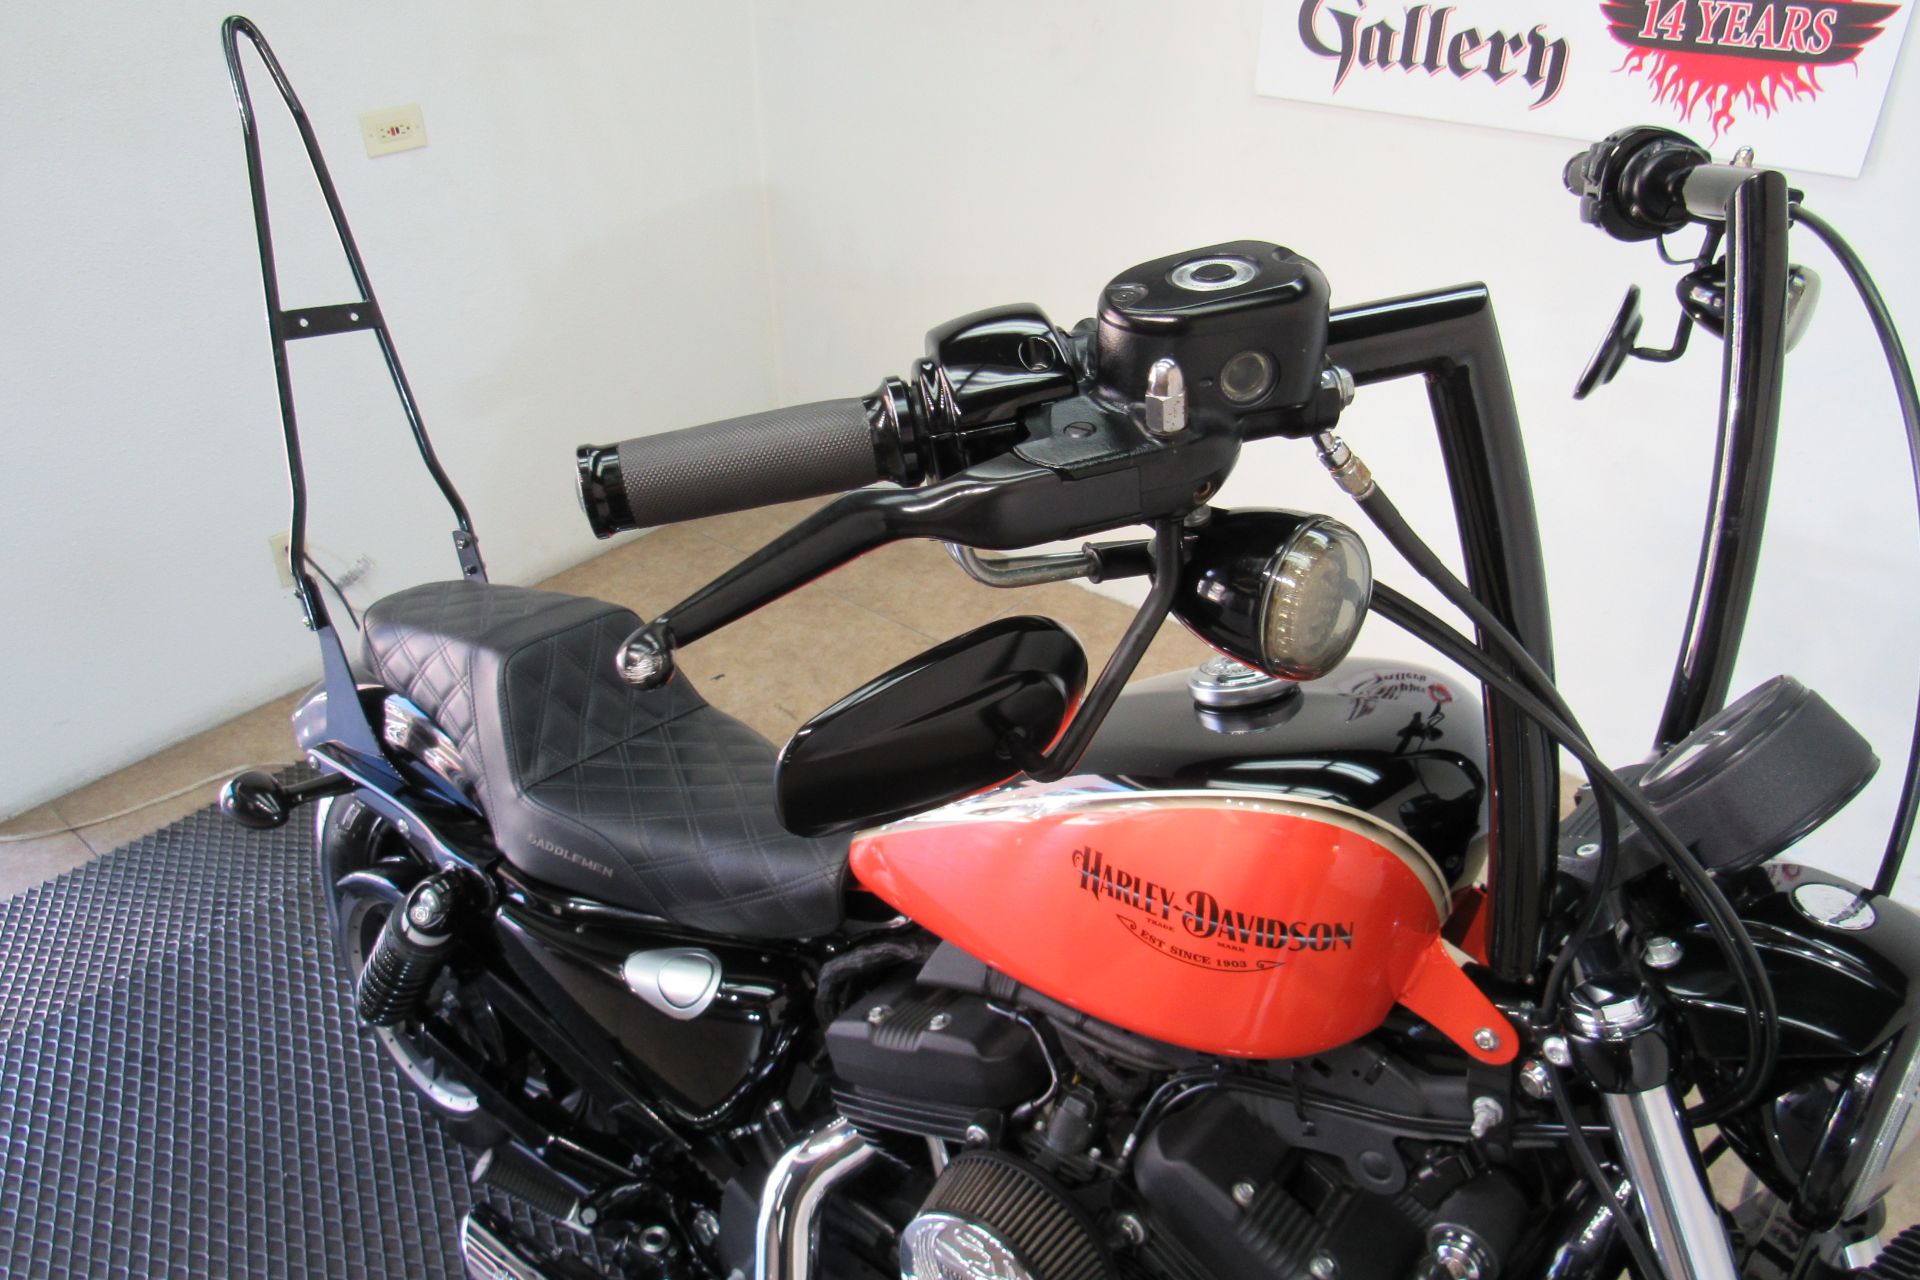 2020 Harley-Davidson Iron 1200™ in Temecula, California - Photo 22